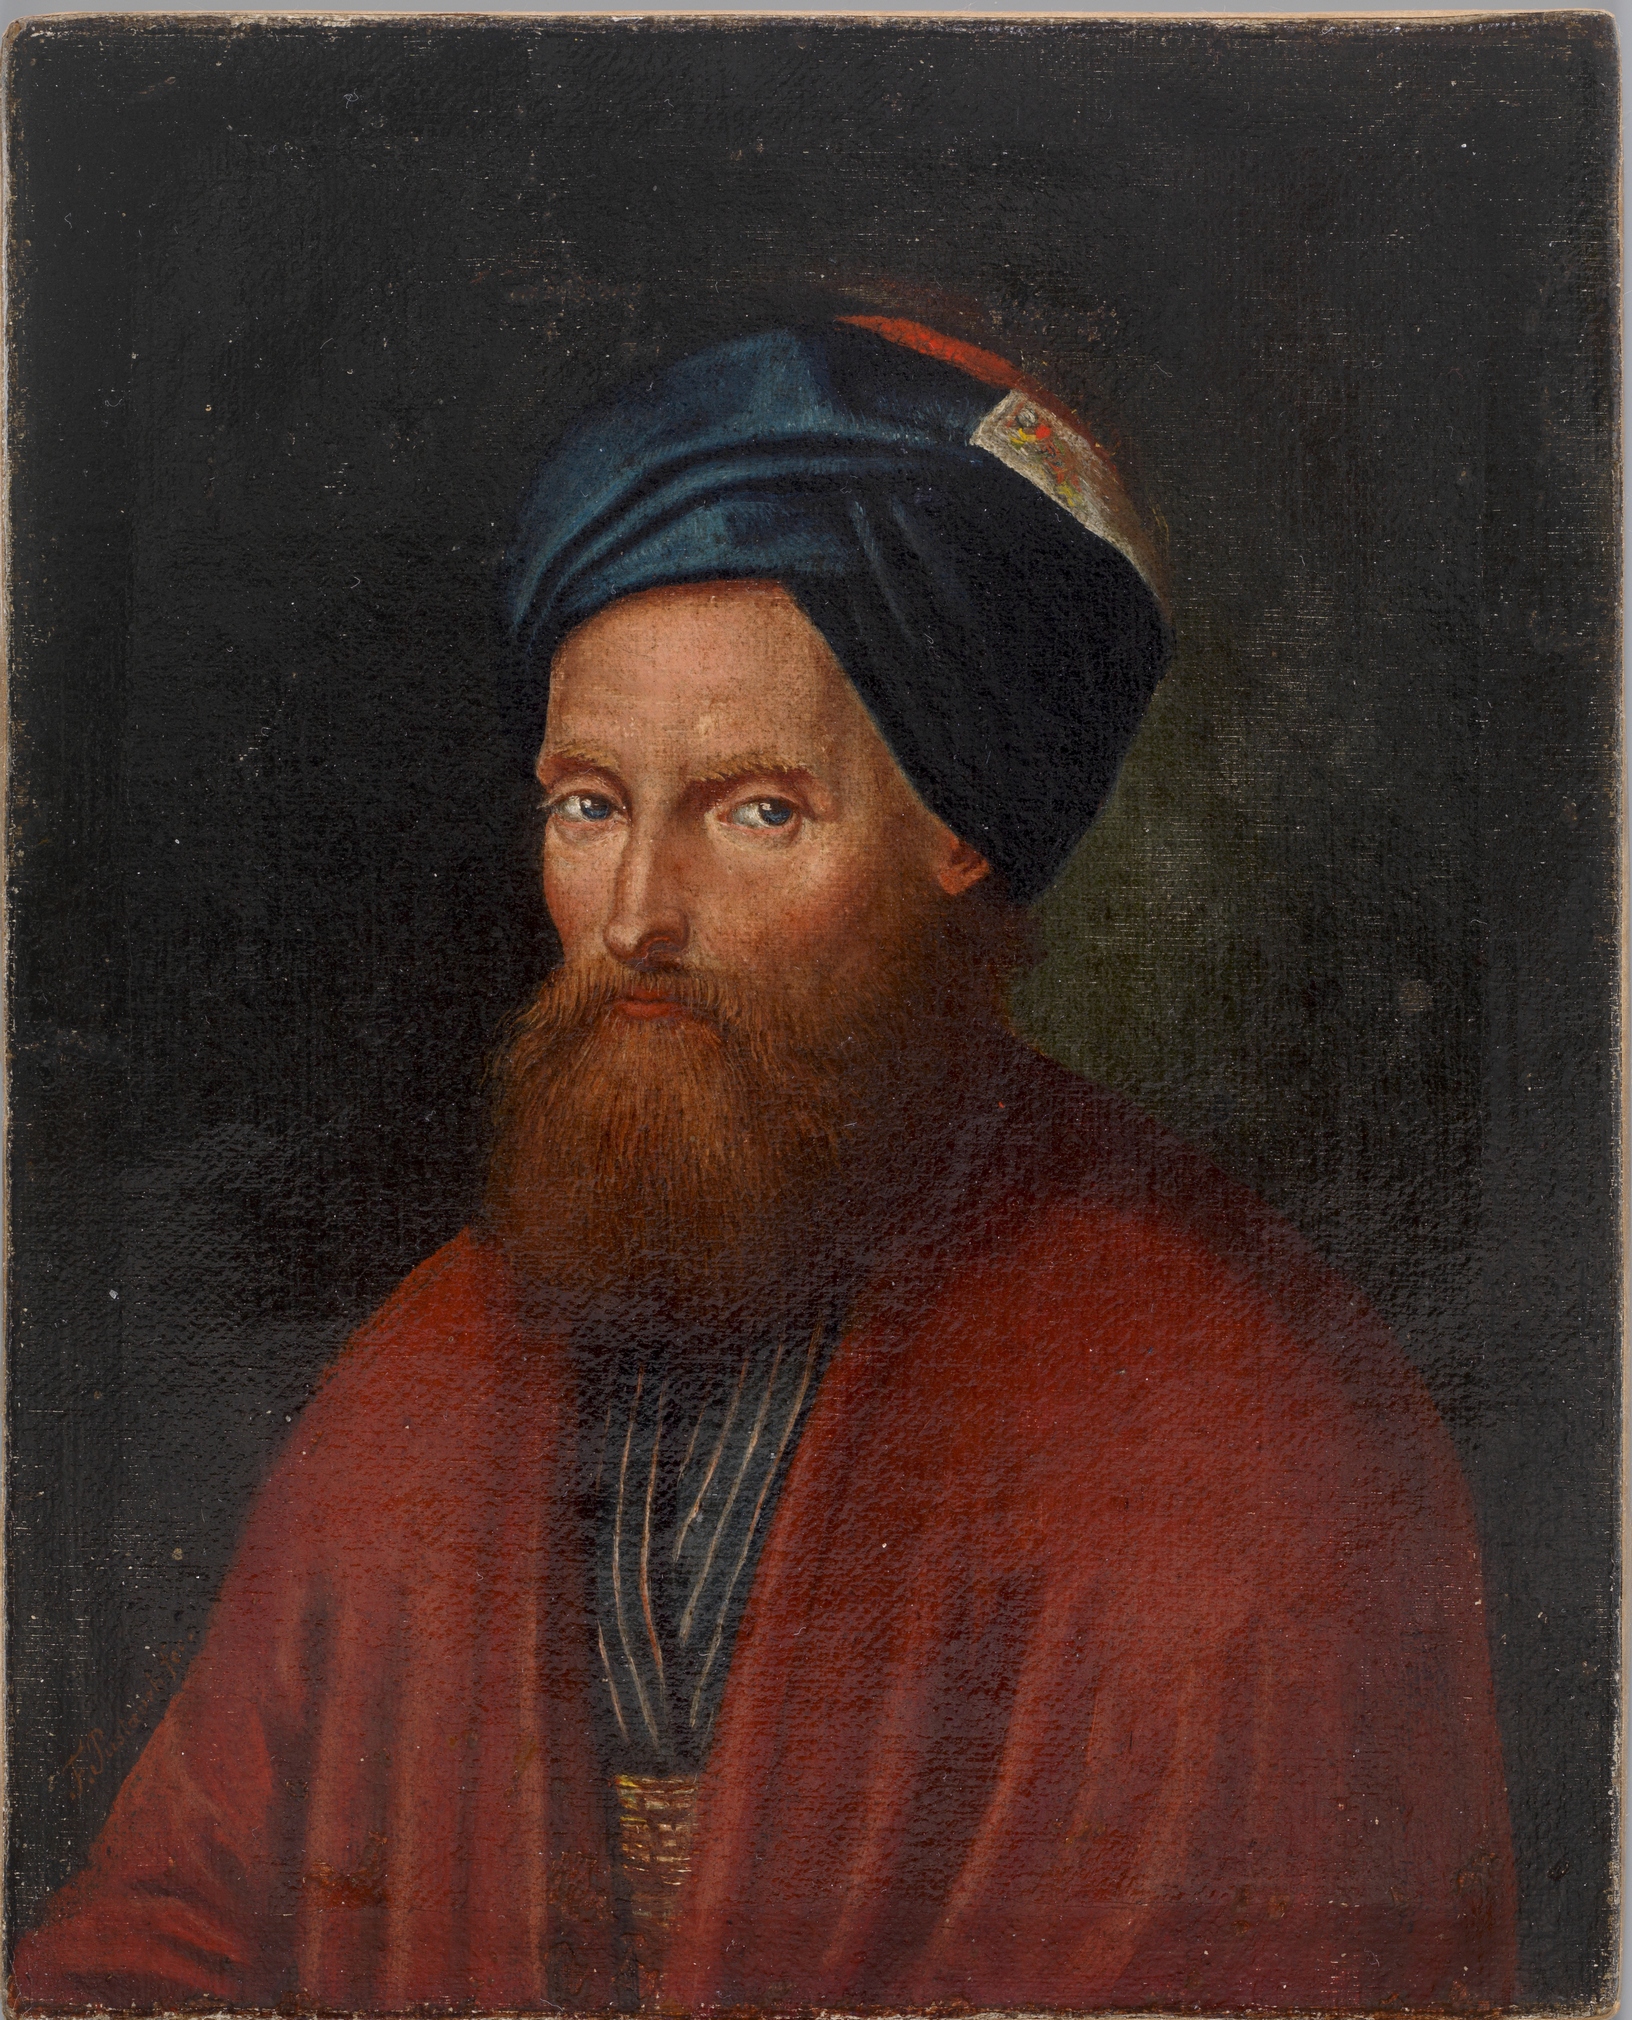 Ignatius Knoblecher (a portrait by Franc Pustavrh)